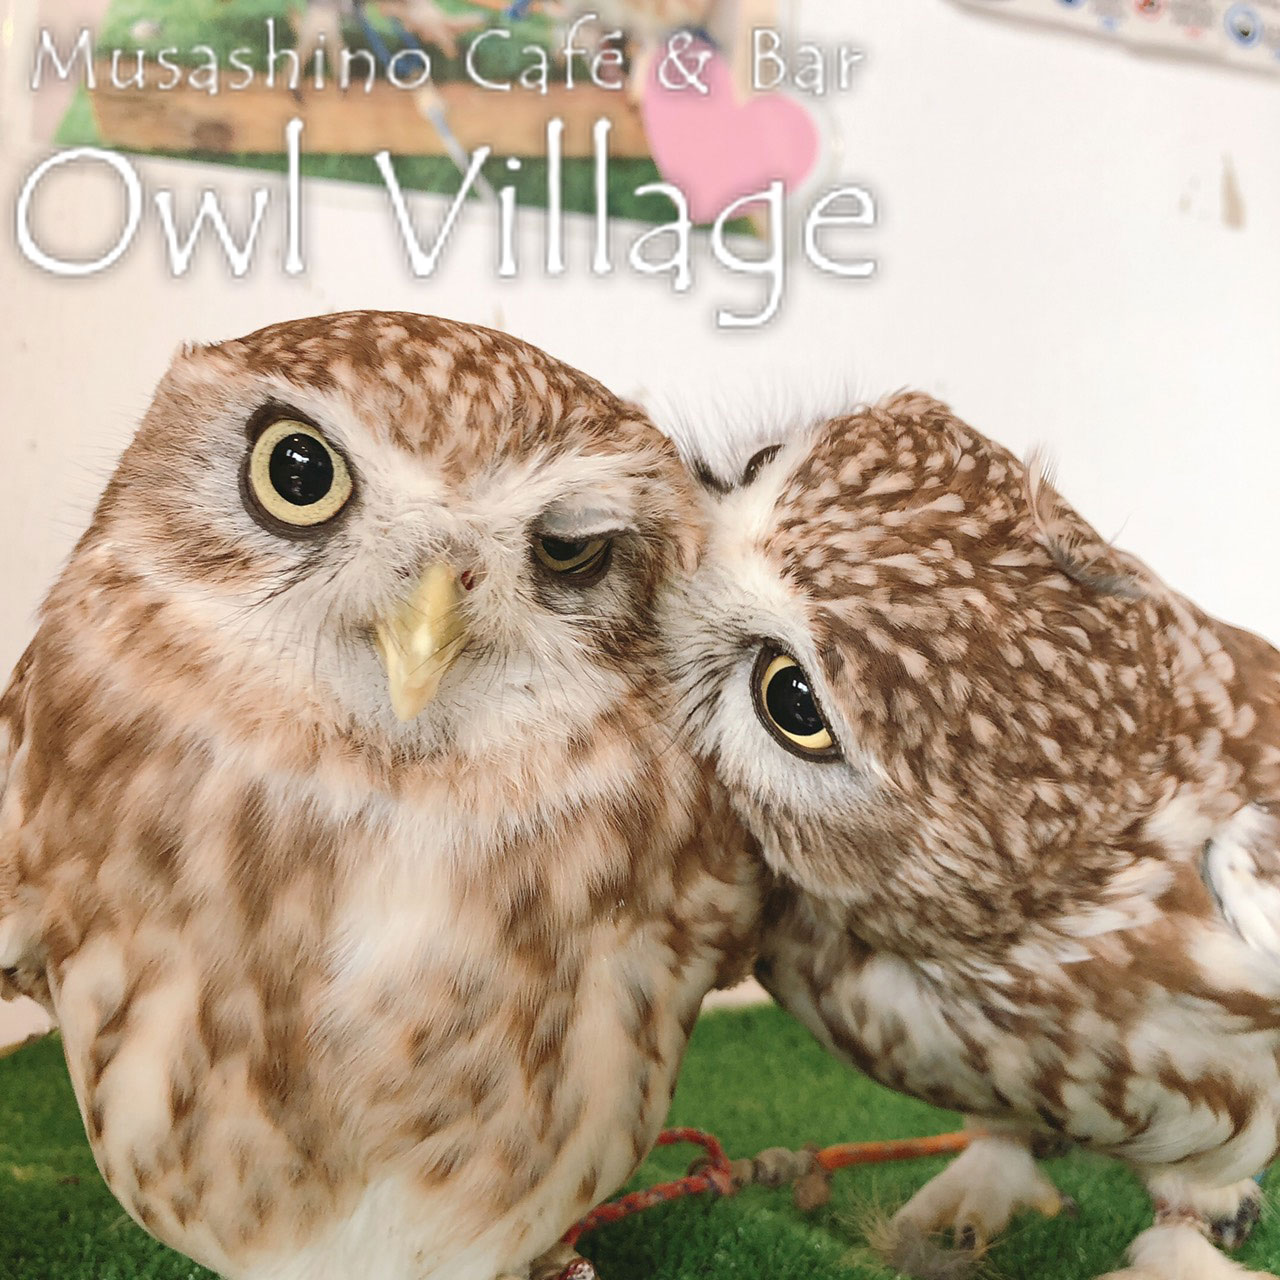 owl cafe harajuku down load free photo 0323 Little Owl